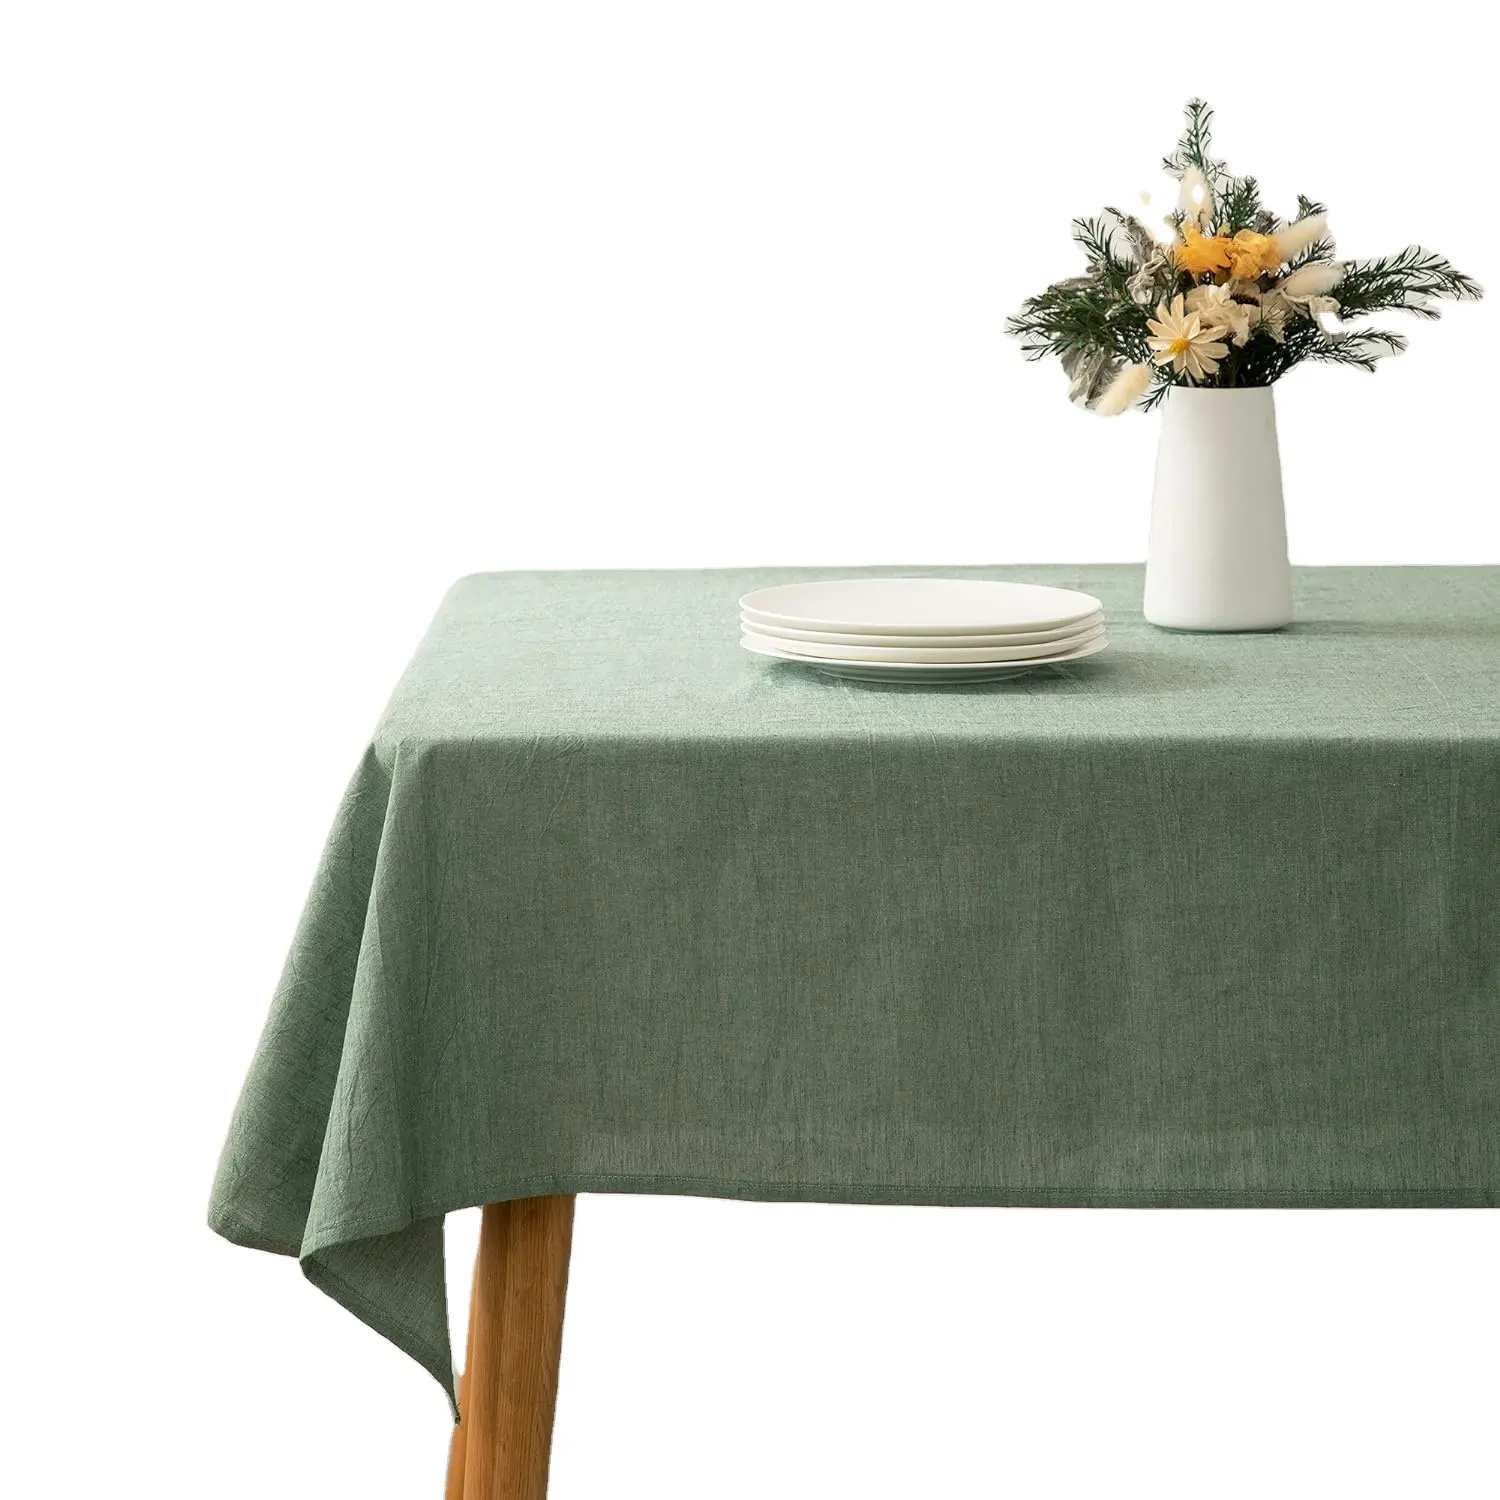 Natural European Flax table linen 100% Pure Linen Rustic Tablecloth Rectangular Table cover